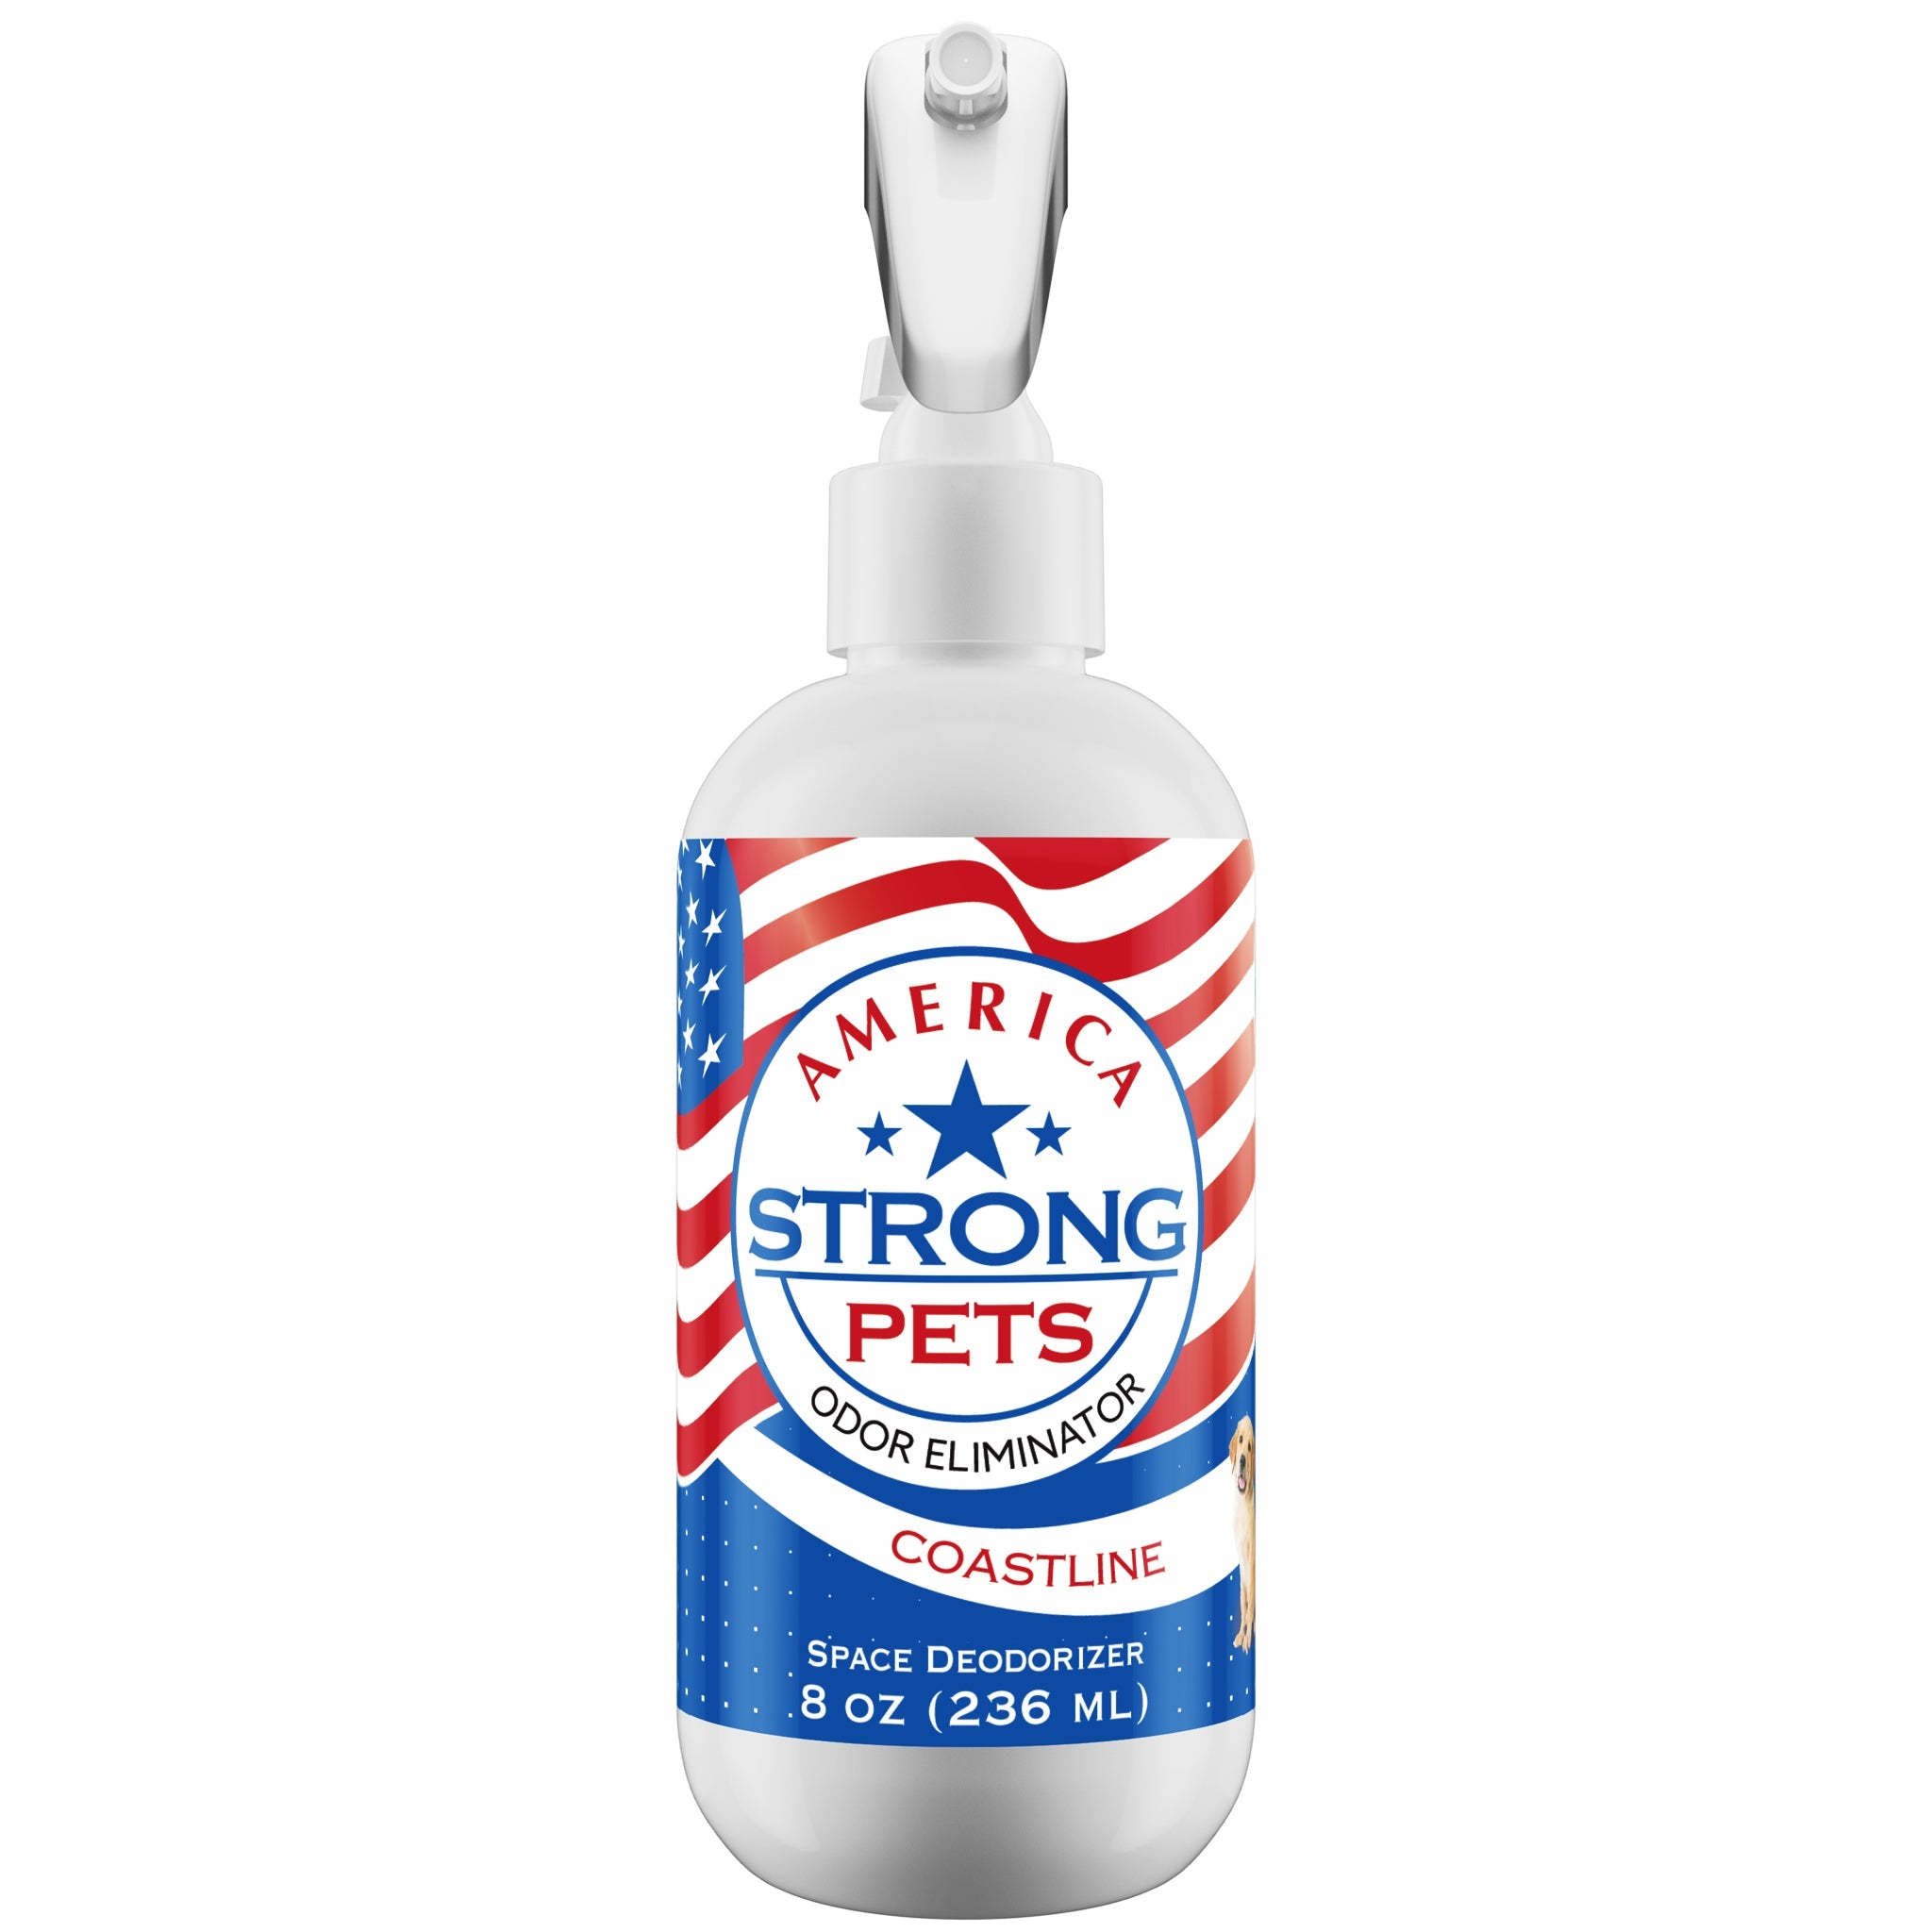 America Strong Pet Odor Eliminator - Coastline Scent Size: 8 fl oz